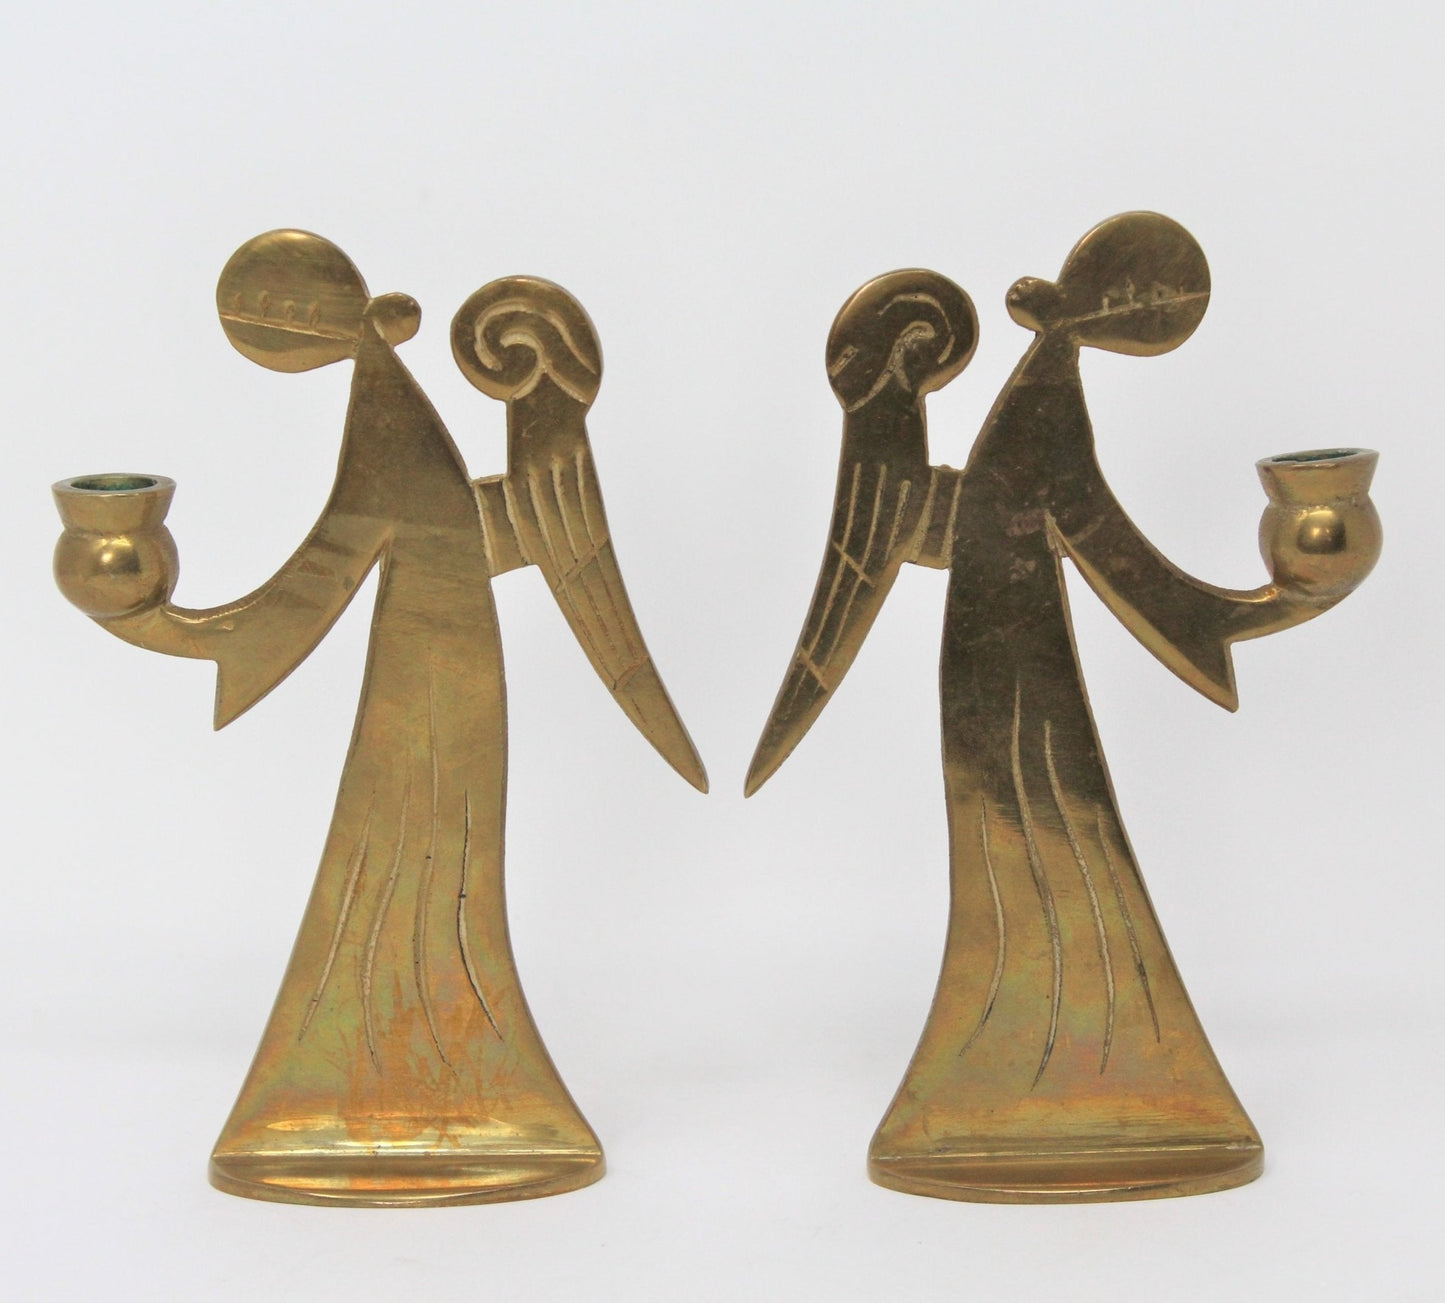 Candle Holders, Brass Angels, Set of 2, Hong Kong, Vintage